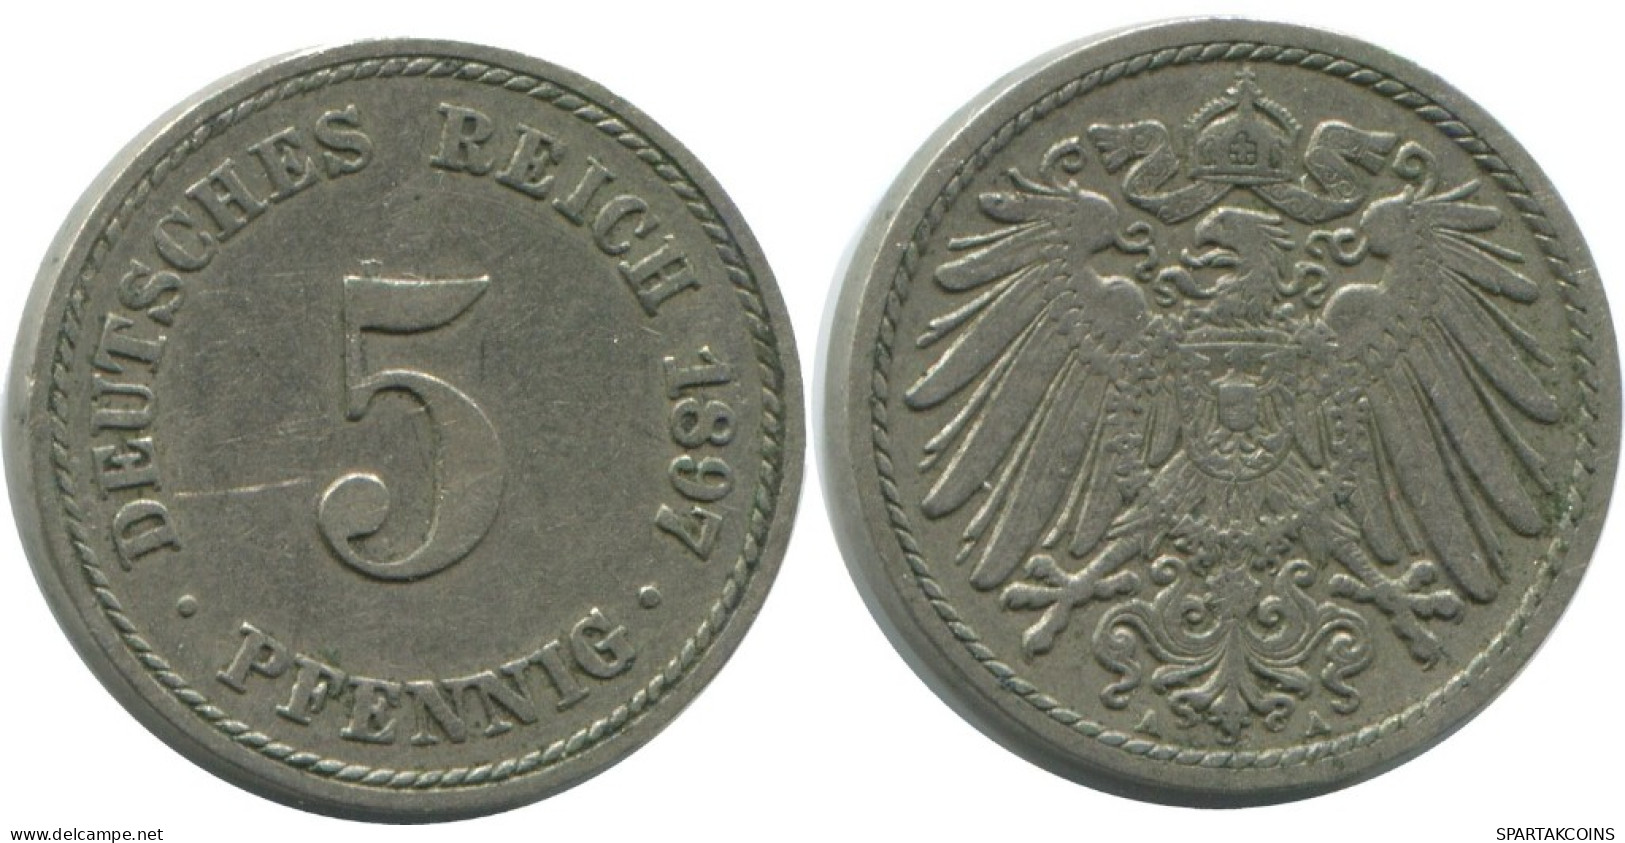 5 PFENNIG 1897 A DEUTSCHLAND Münze GERMANY #AE704.D.A - 5 Pfennig